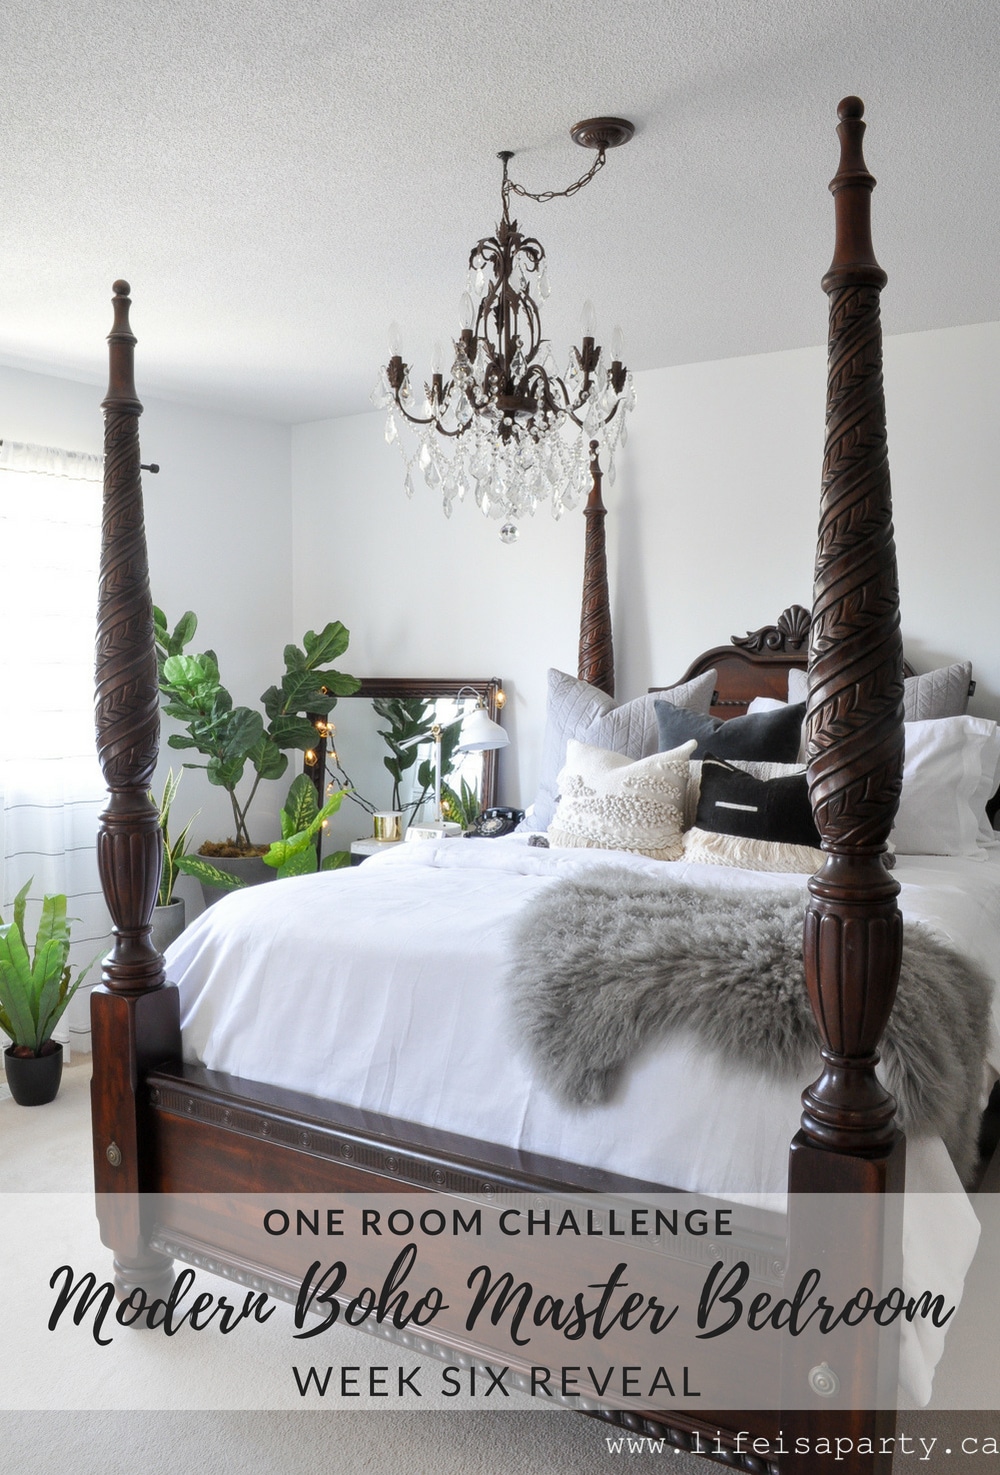 Modern Boho Master Bedroom One Room Challenge Reveal